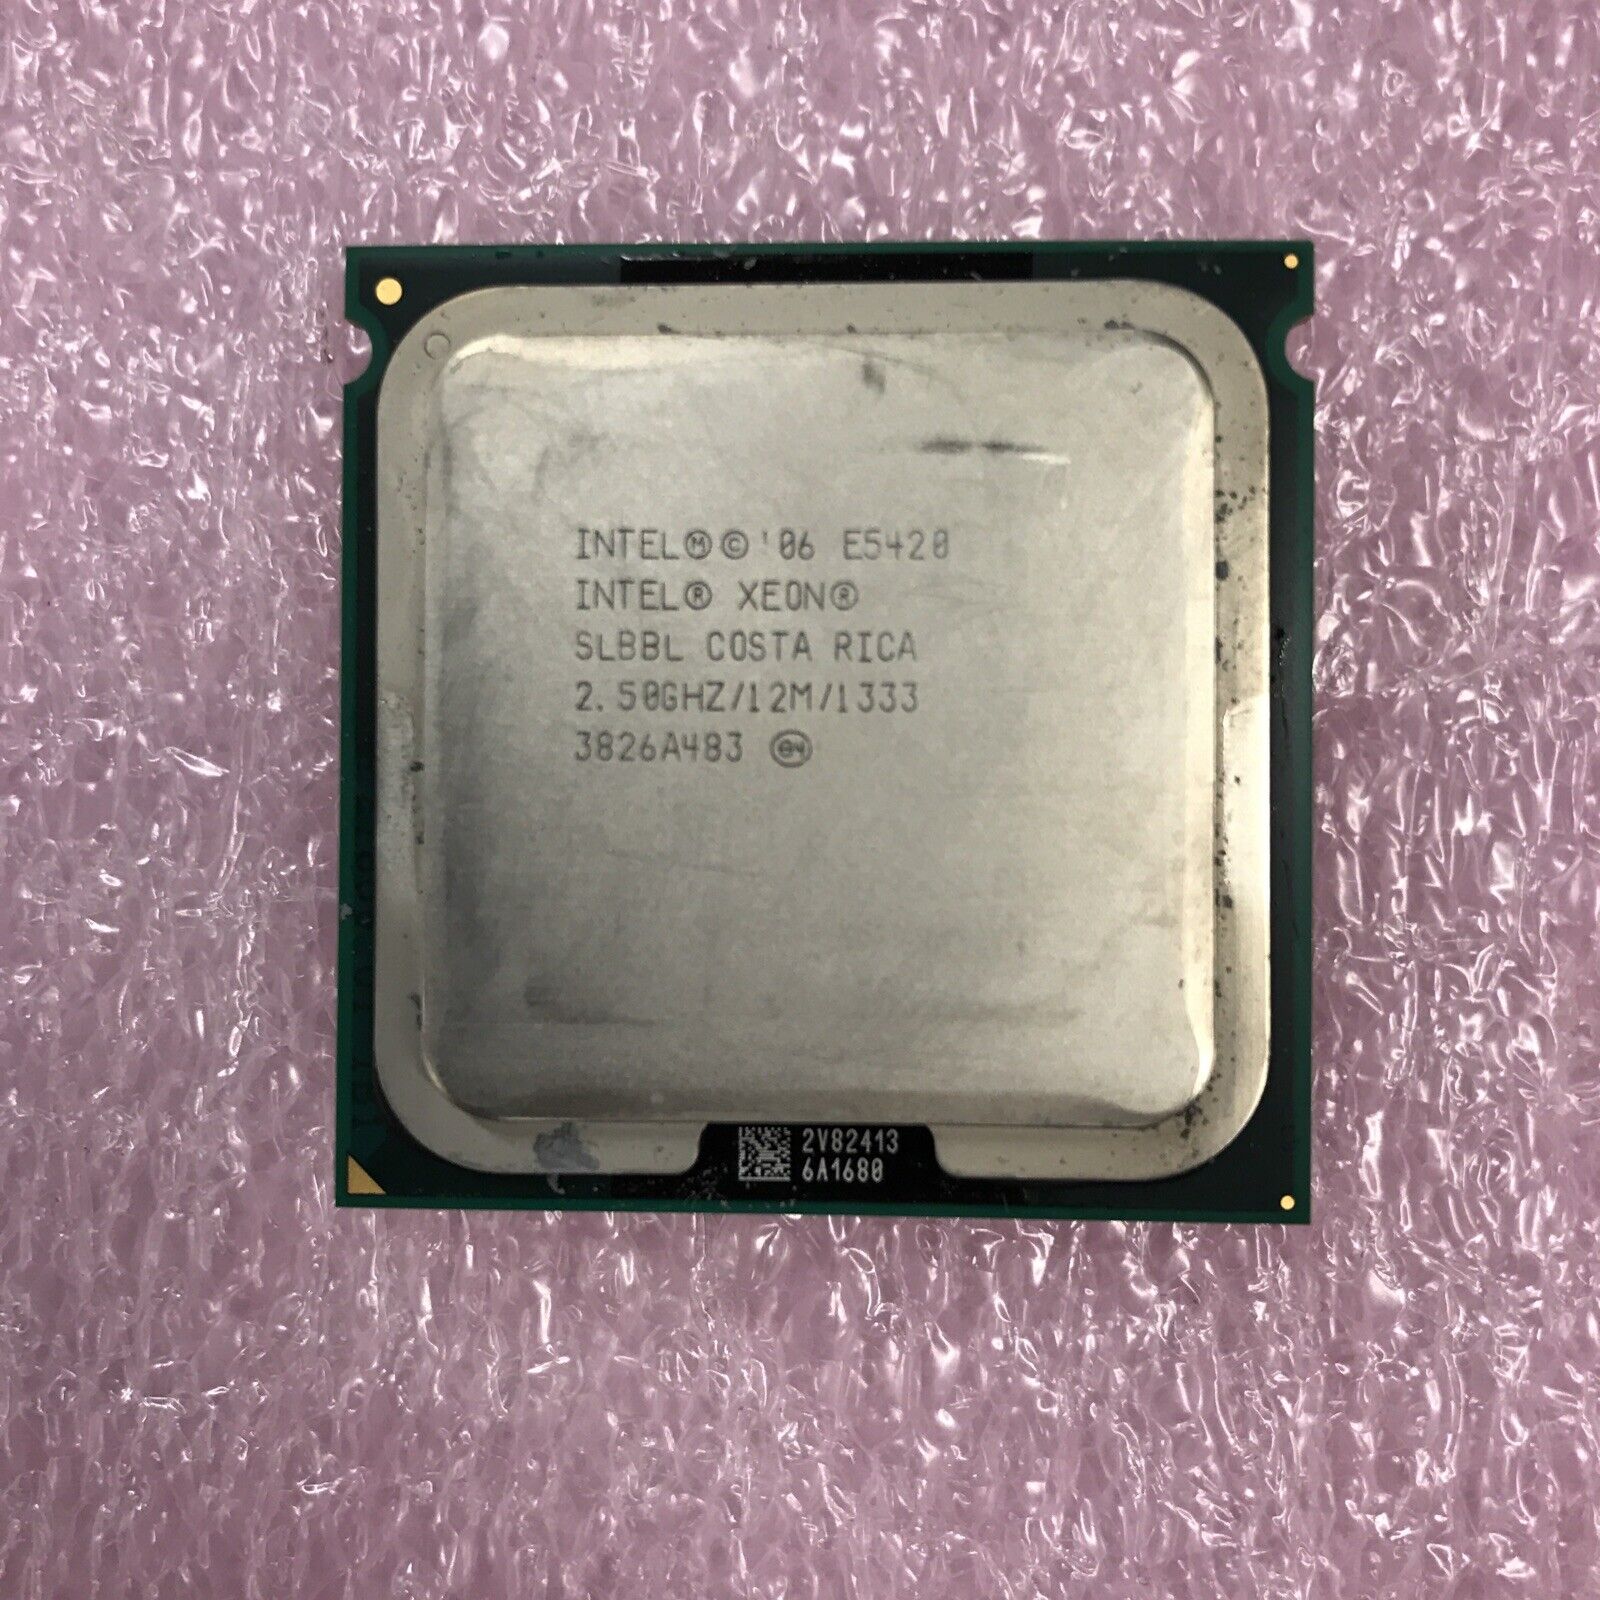 Intel Xeon E5420 2.50GHz LGA771 Socket Quad-Core CPU Processor SLBBL